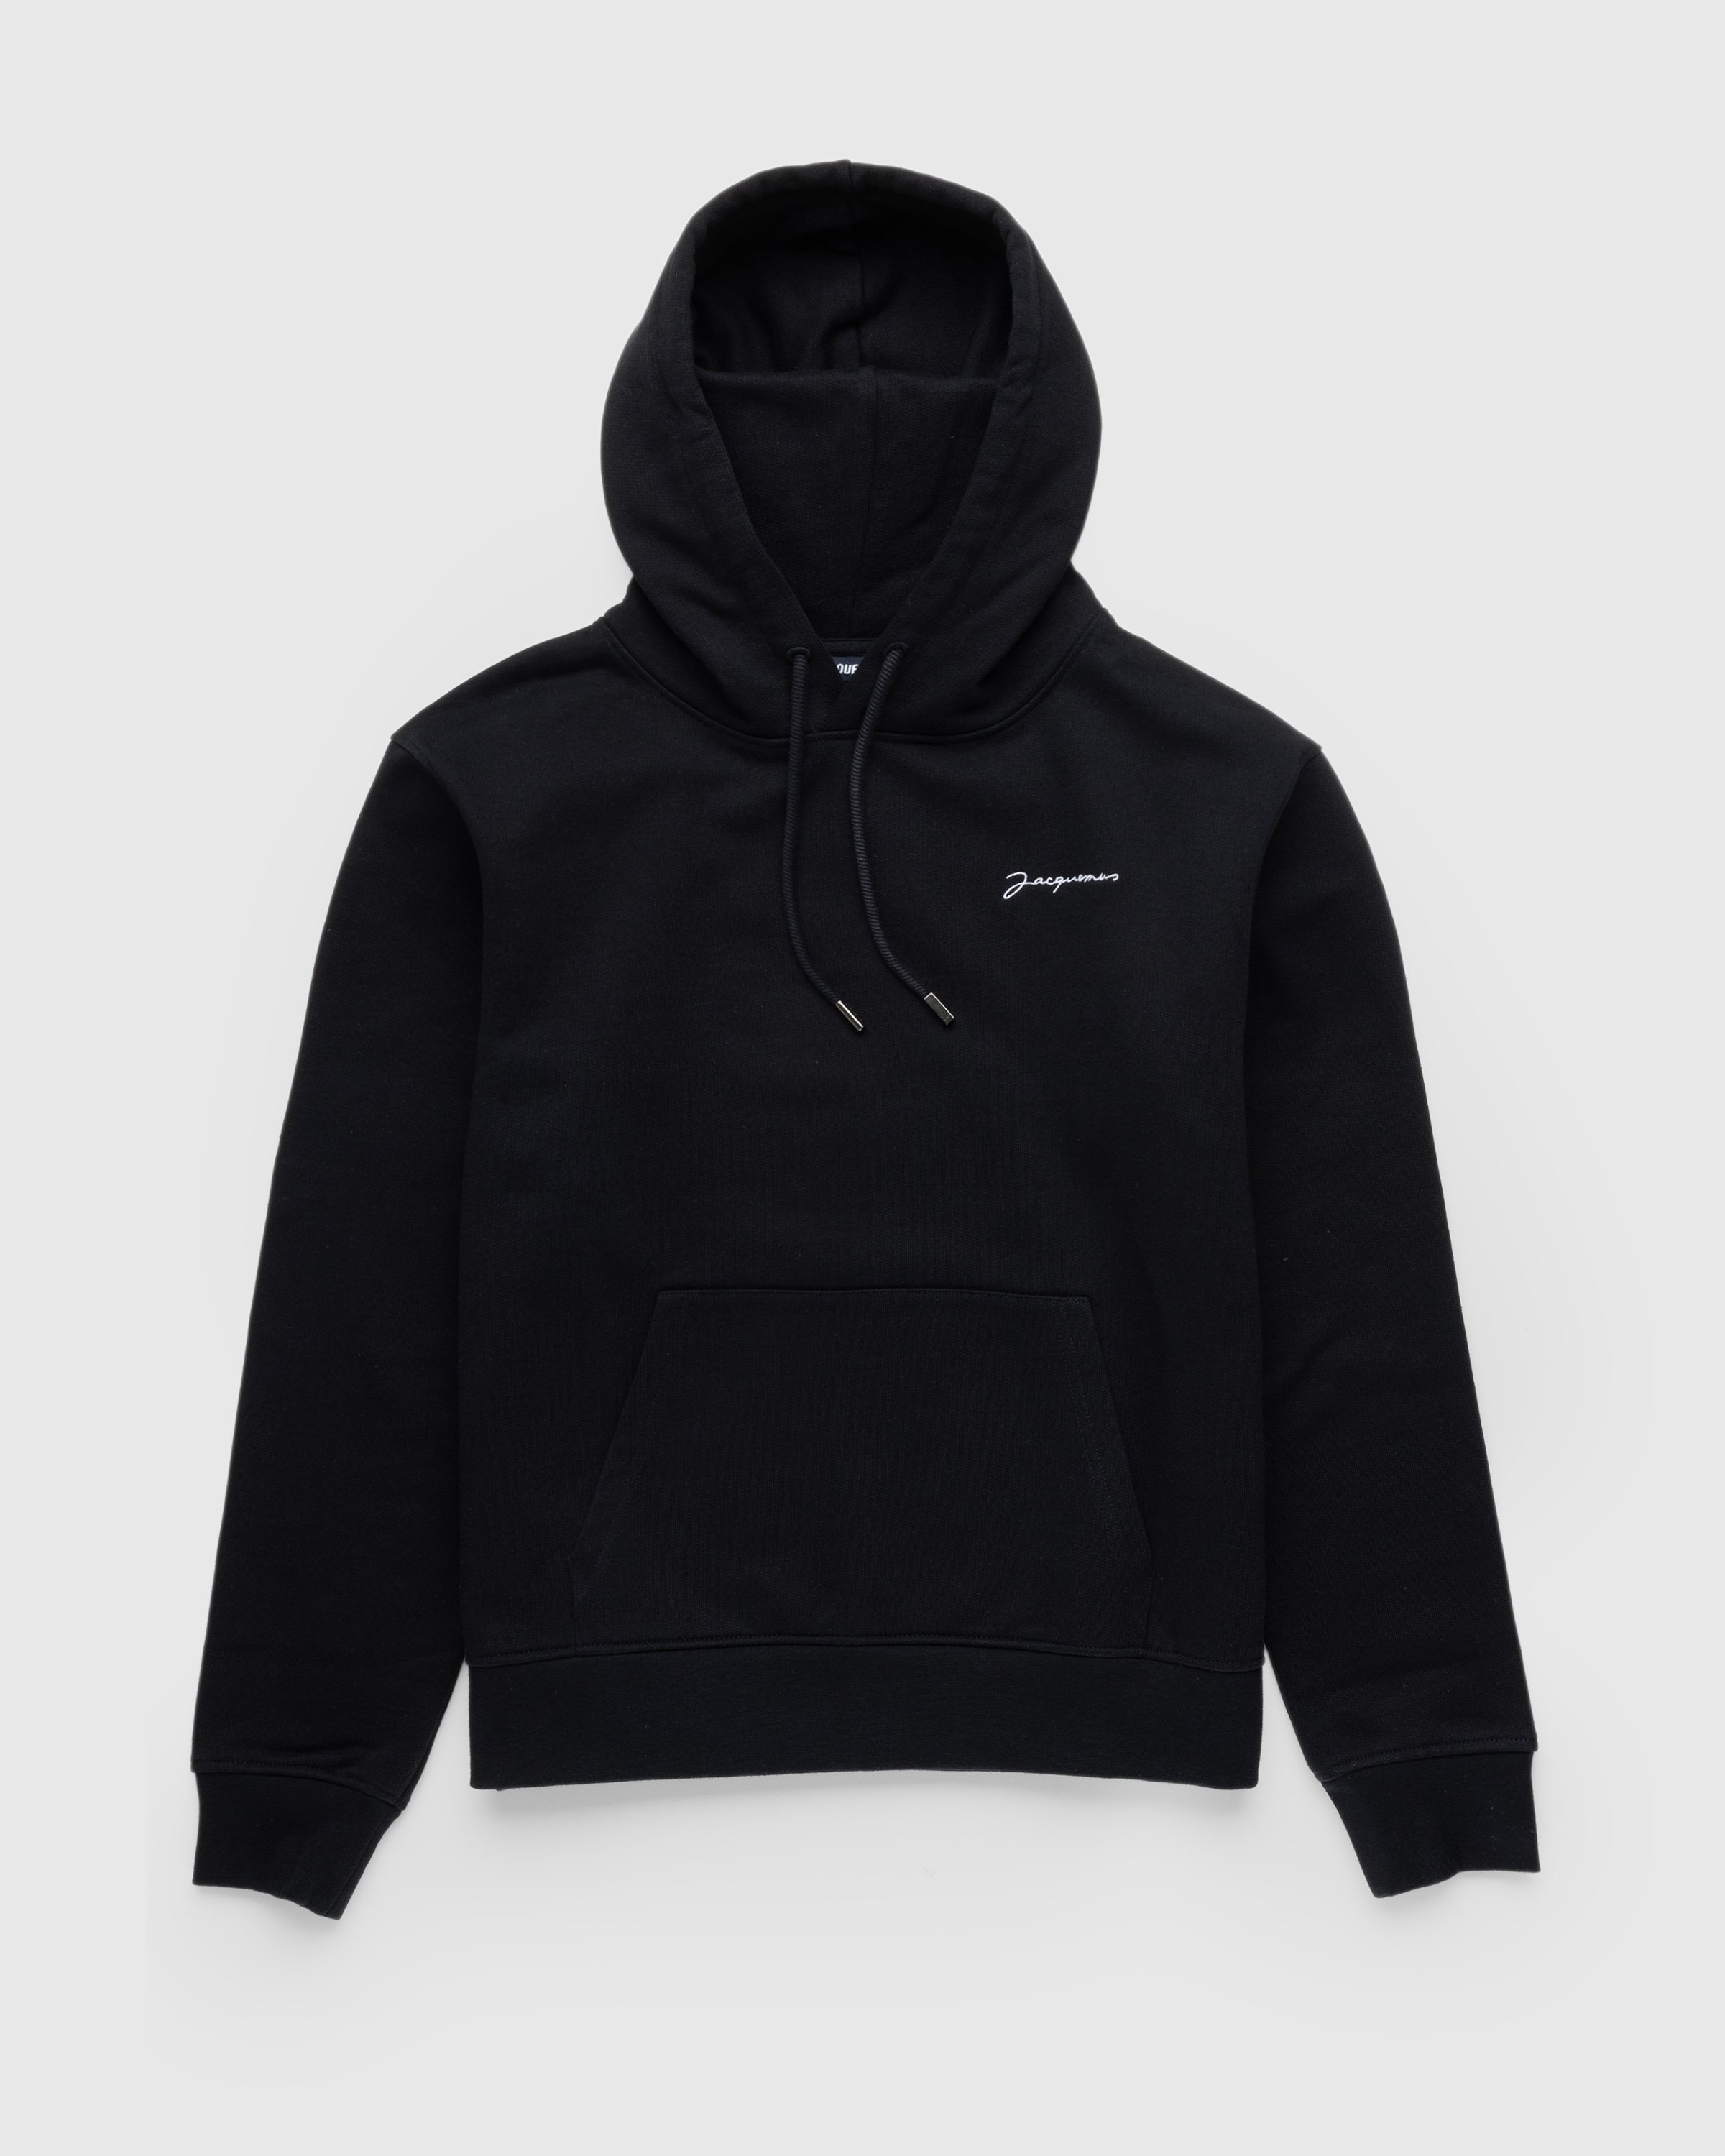 JACQUEMUS - Le Sweatshirt Brode Black - Clothing - BLACK - Image 1